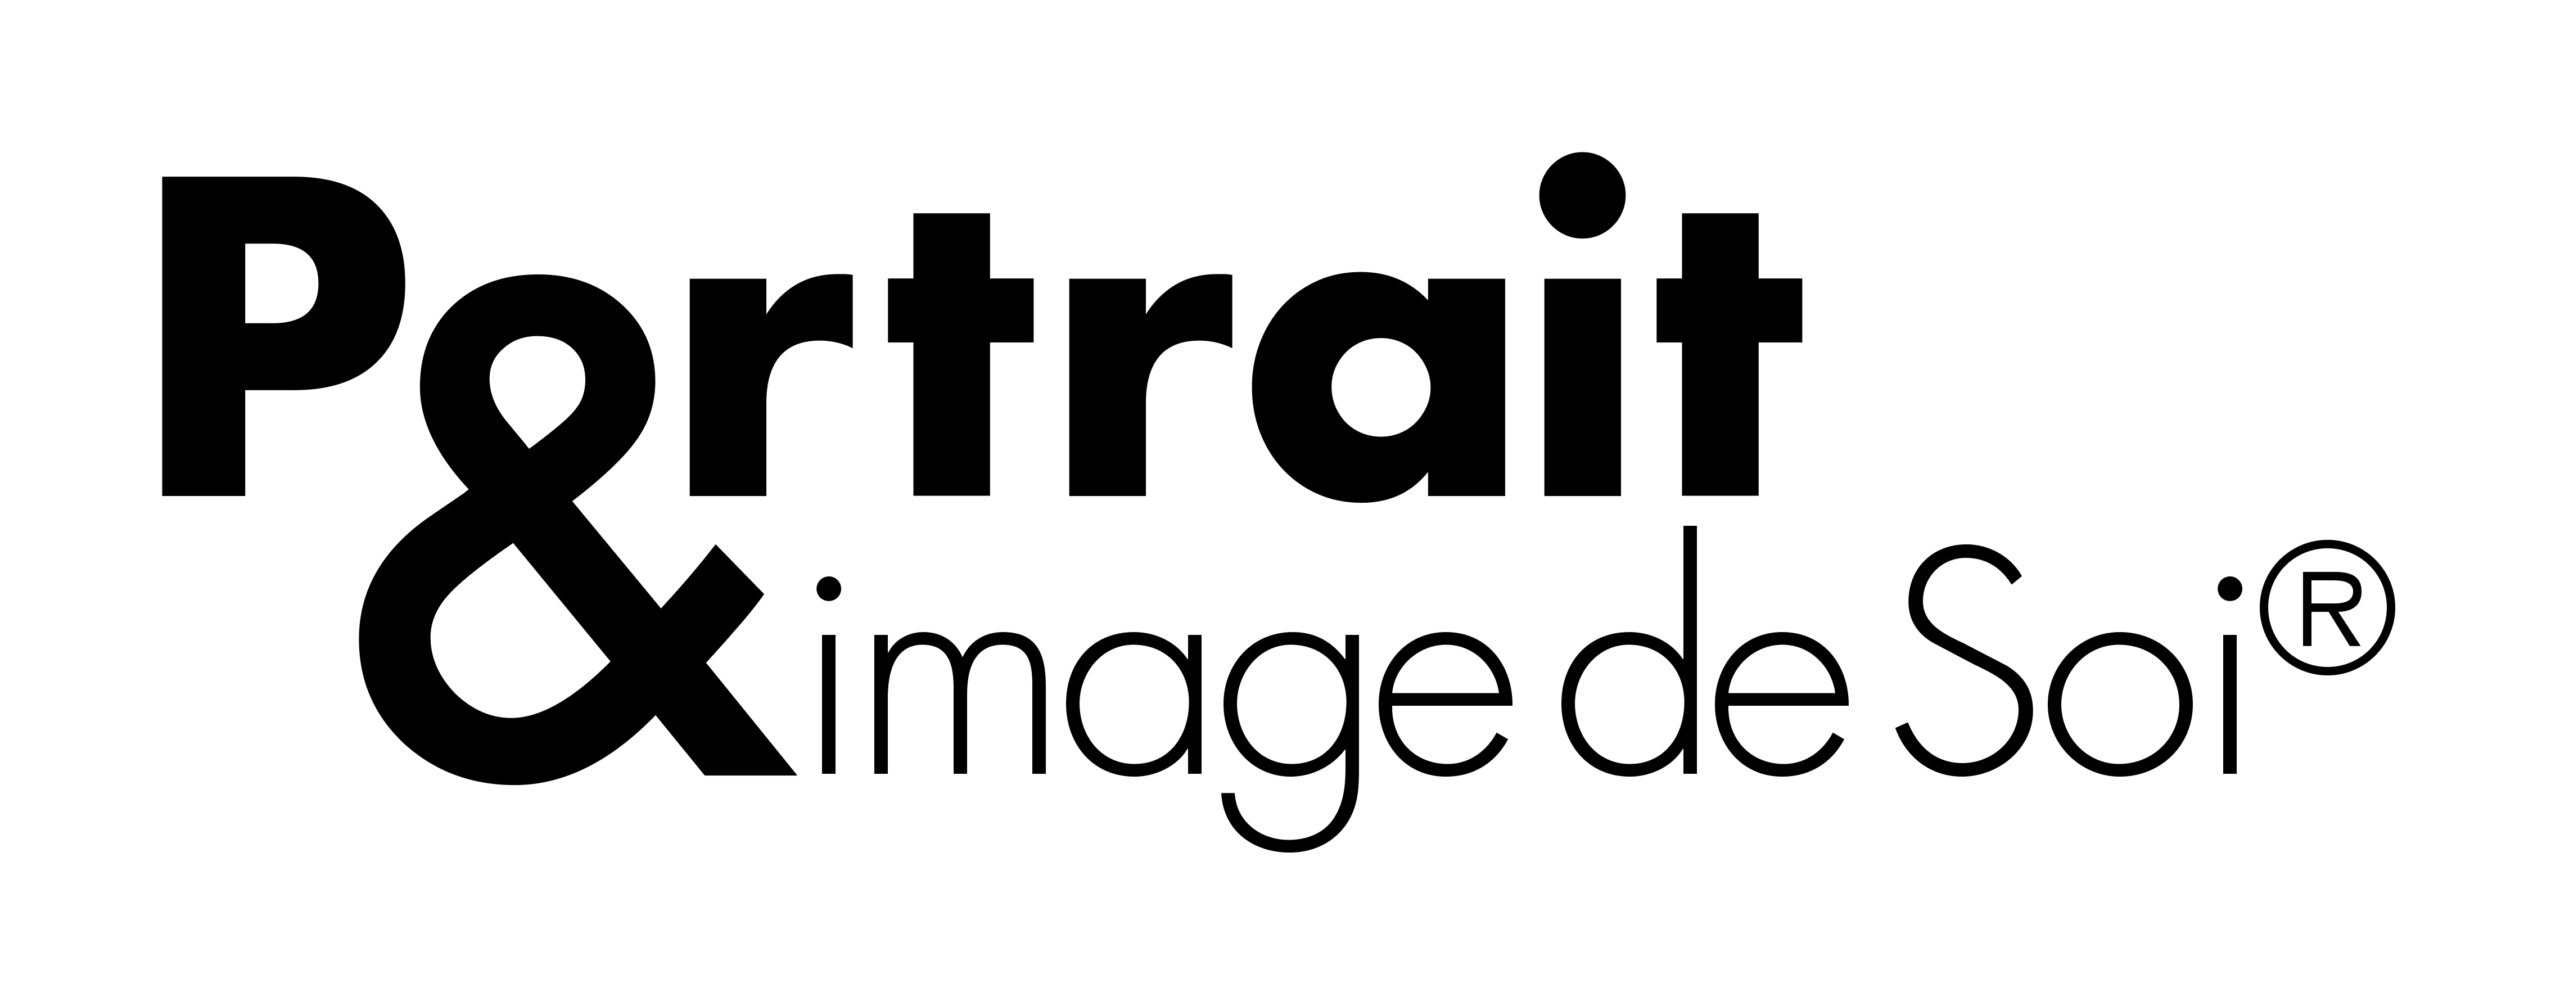 Marque déposée-Portrait & Image de soi-logo_copie